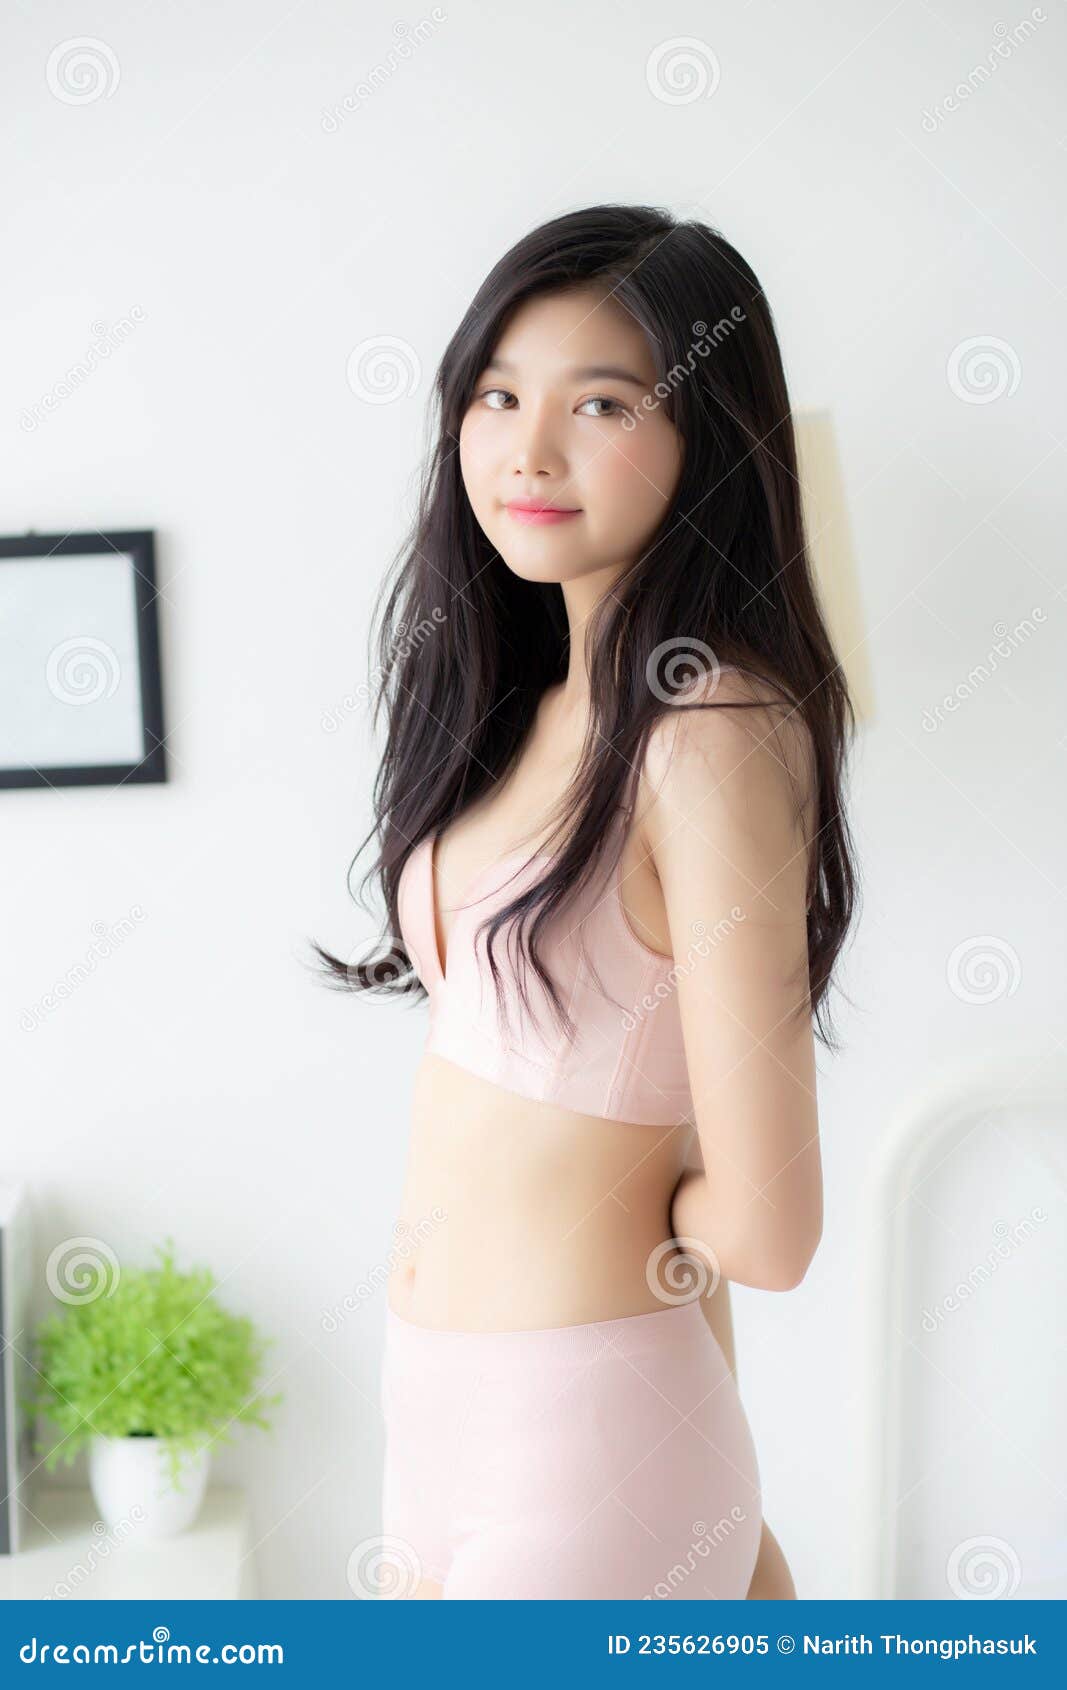 Young Asian Girls In Panties in bloemfontein